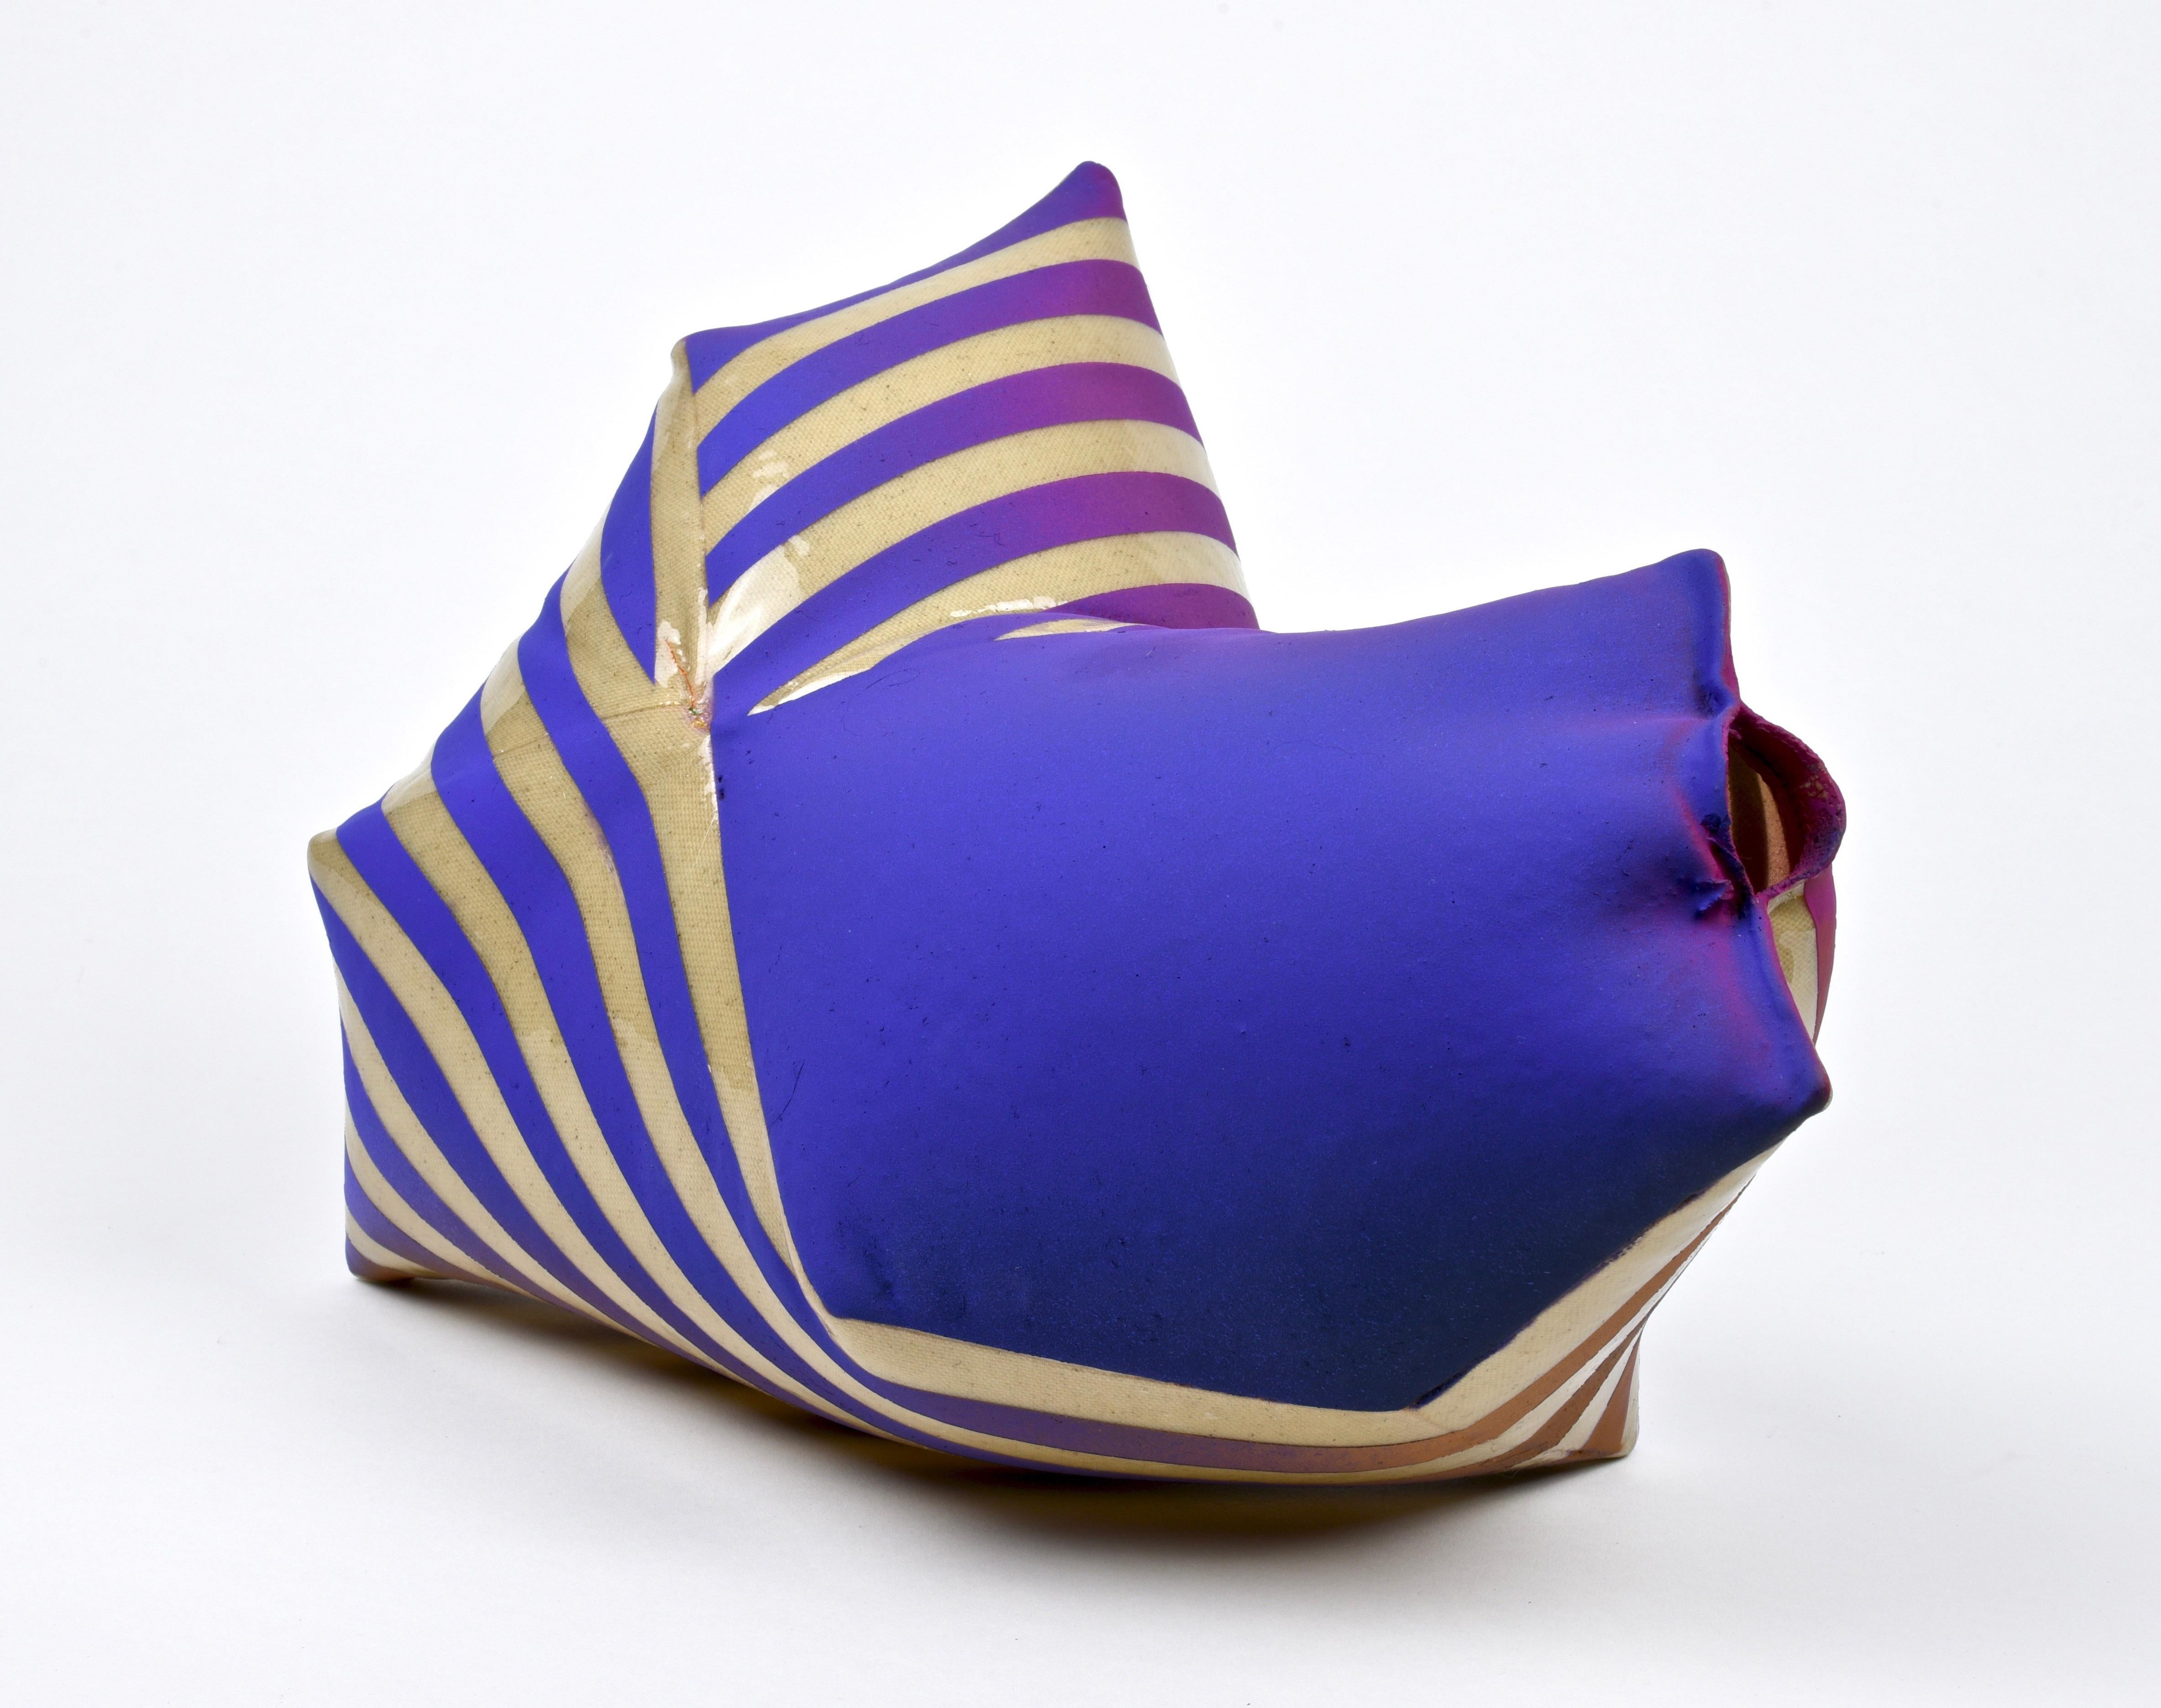 Jeremy Thomas Abstract Sculpture - Betegeuse Purple